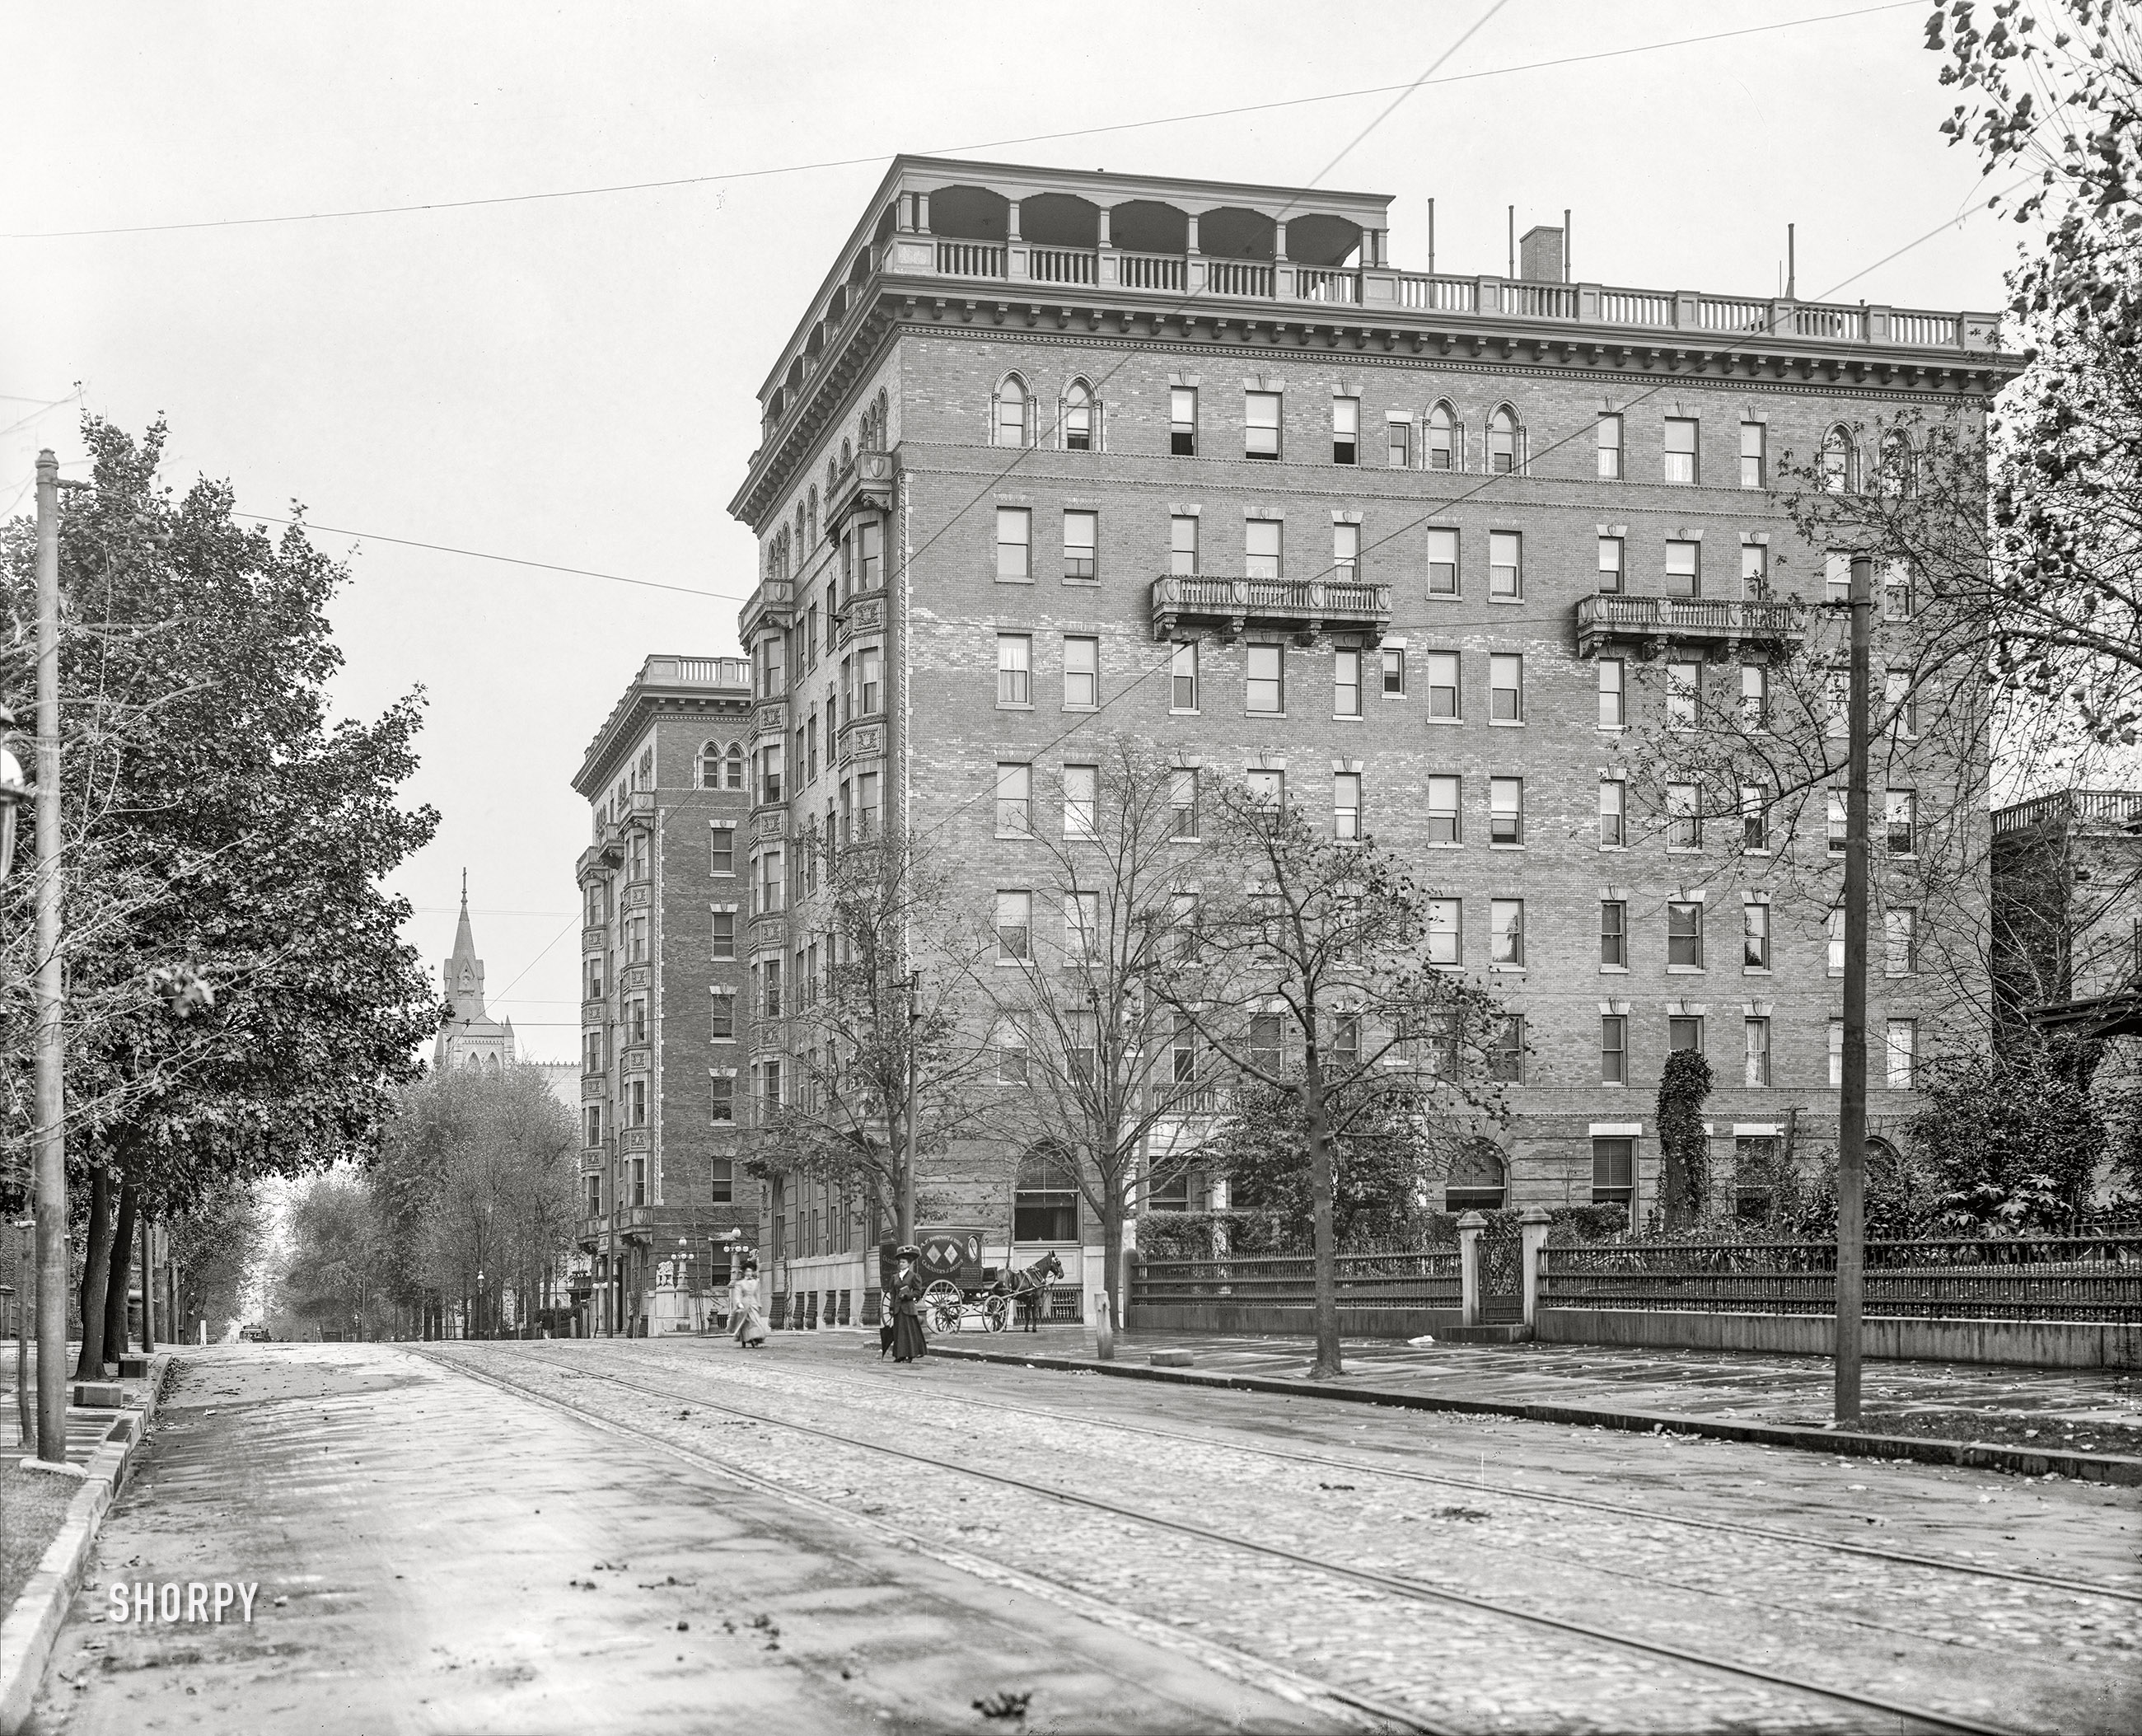 Philadelphia circa 1908. "Hamilton Court apartments, Chestnut Street." 8x10 inch dry plate glass negative, Detroit Publishing Company. View full size.